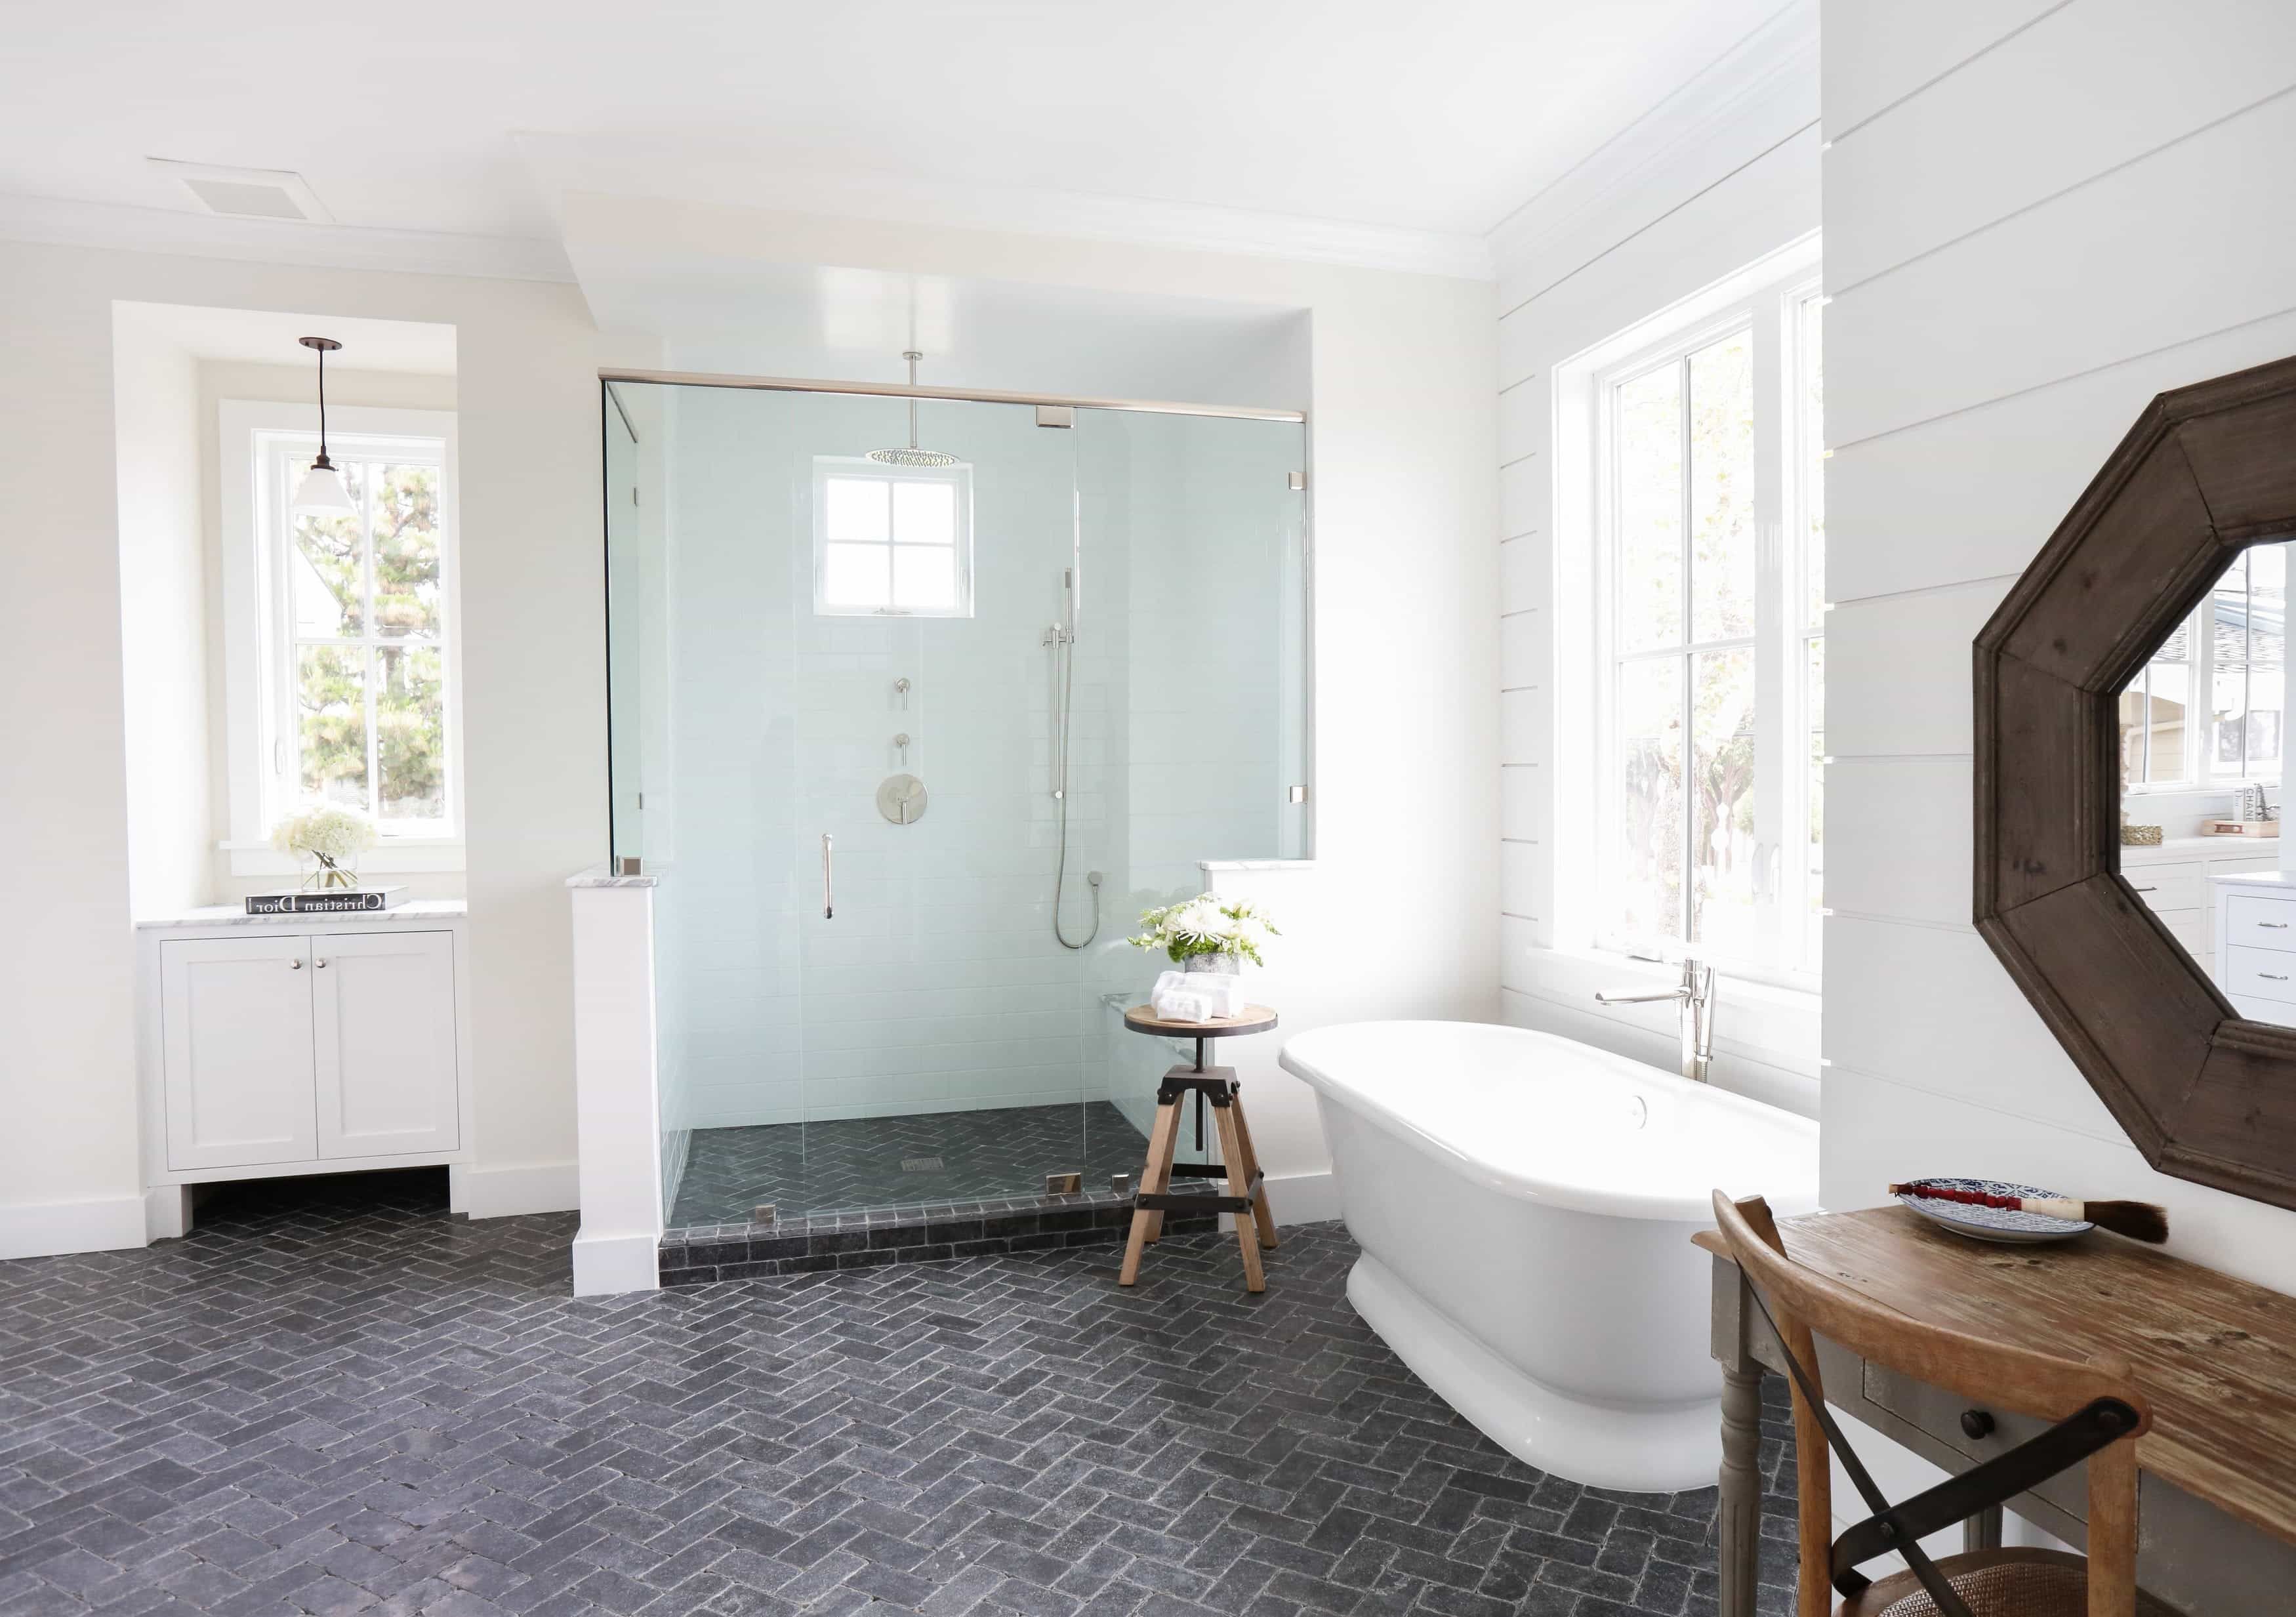 Spacious, Bright Bathroom With Herringbone Tile Floors In Grey Color (View 4 of 20)